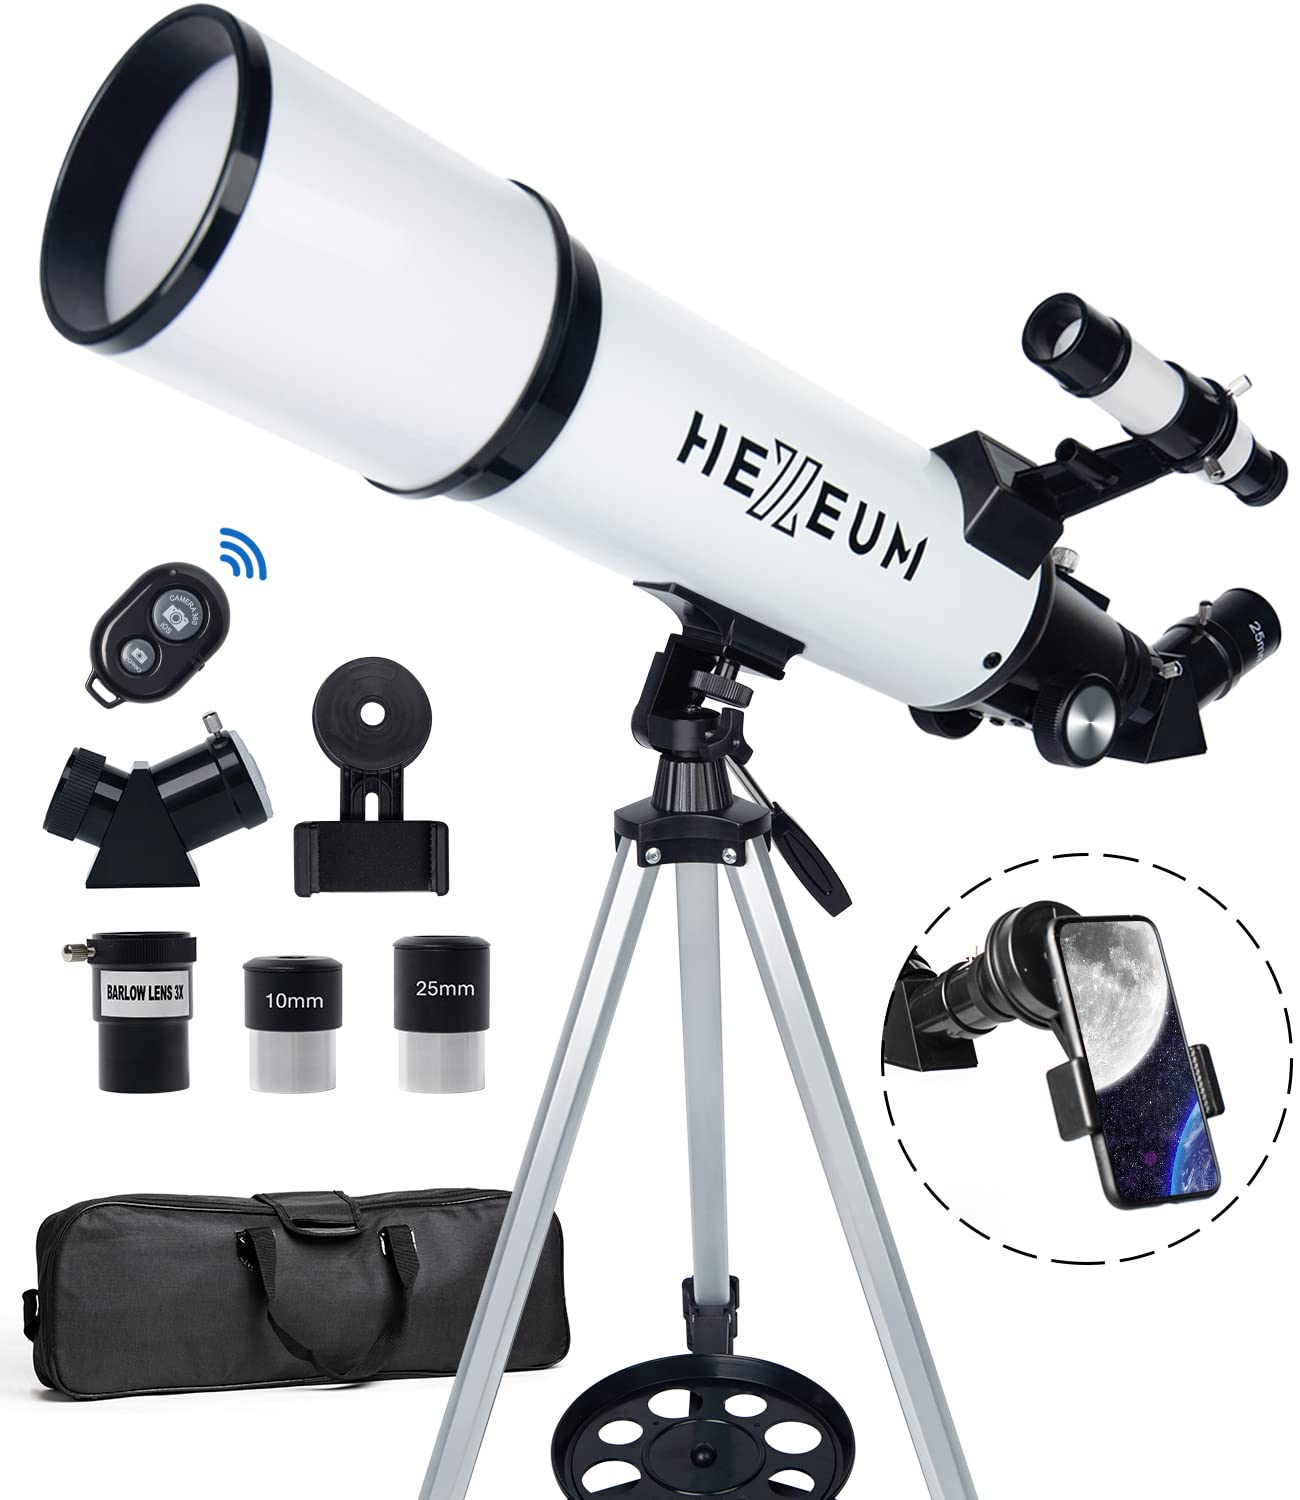 Advanced Hexeum Telescope